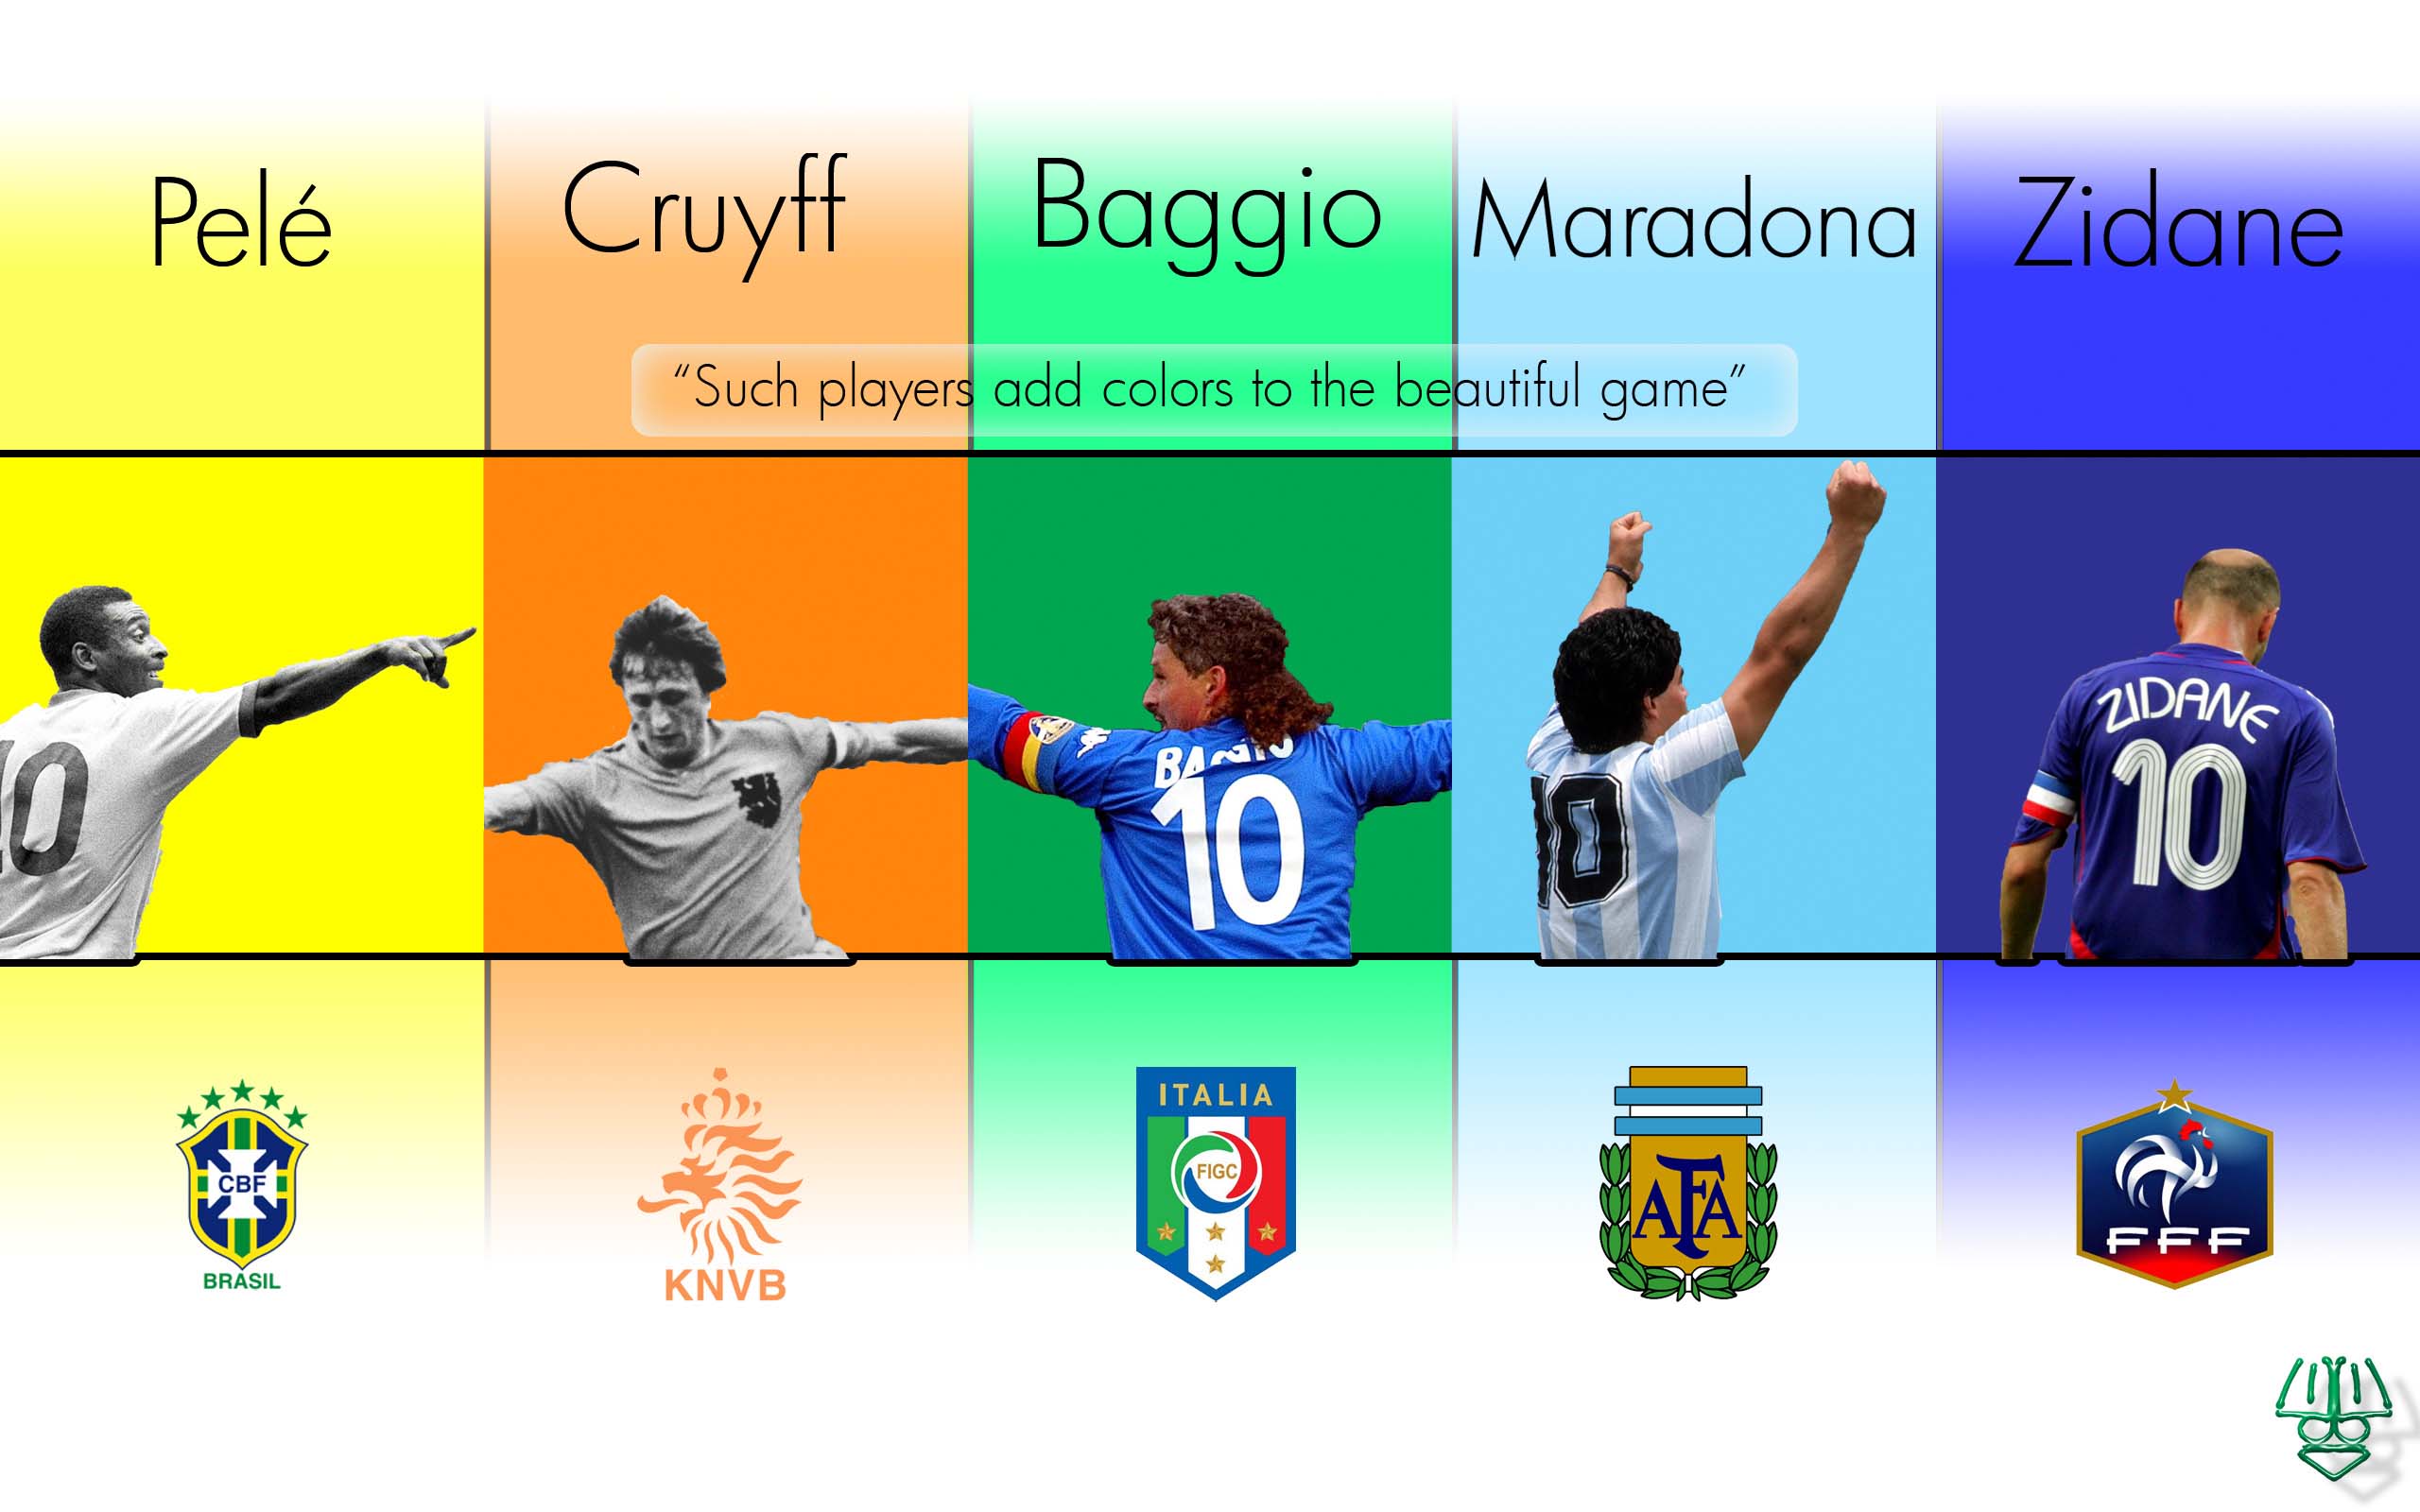 Pele, Cruytt, Baggio, Maradona and Zidane